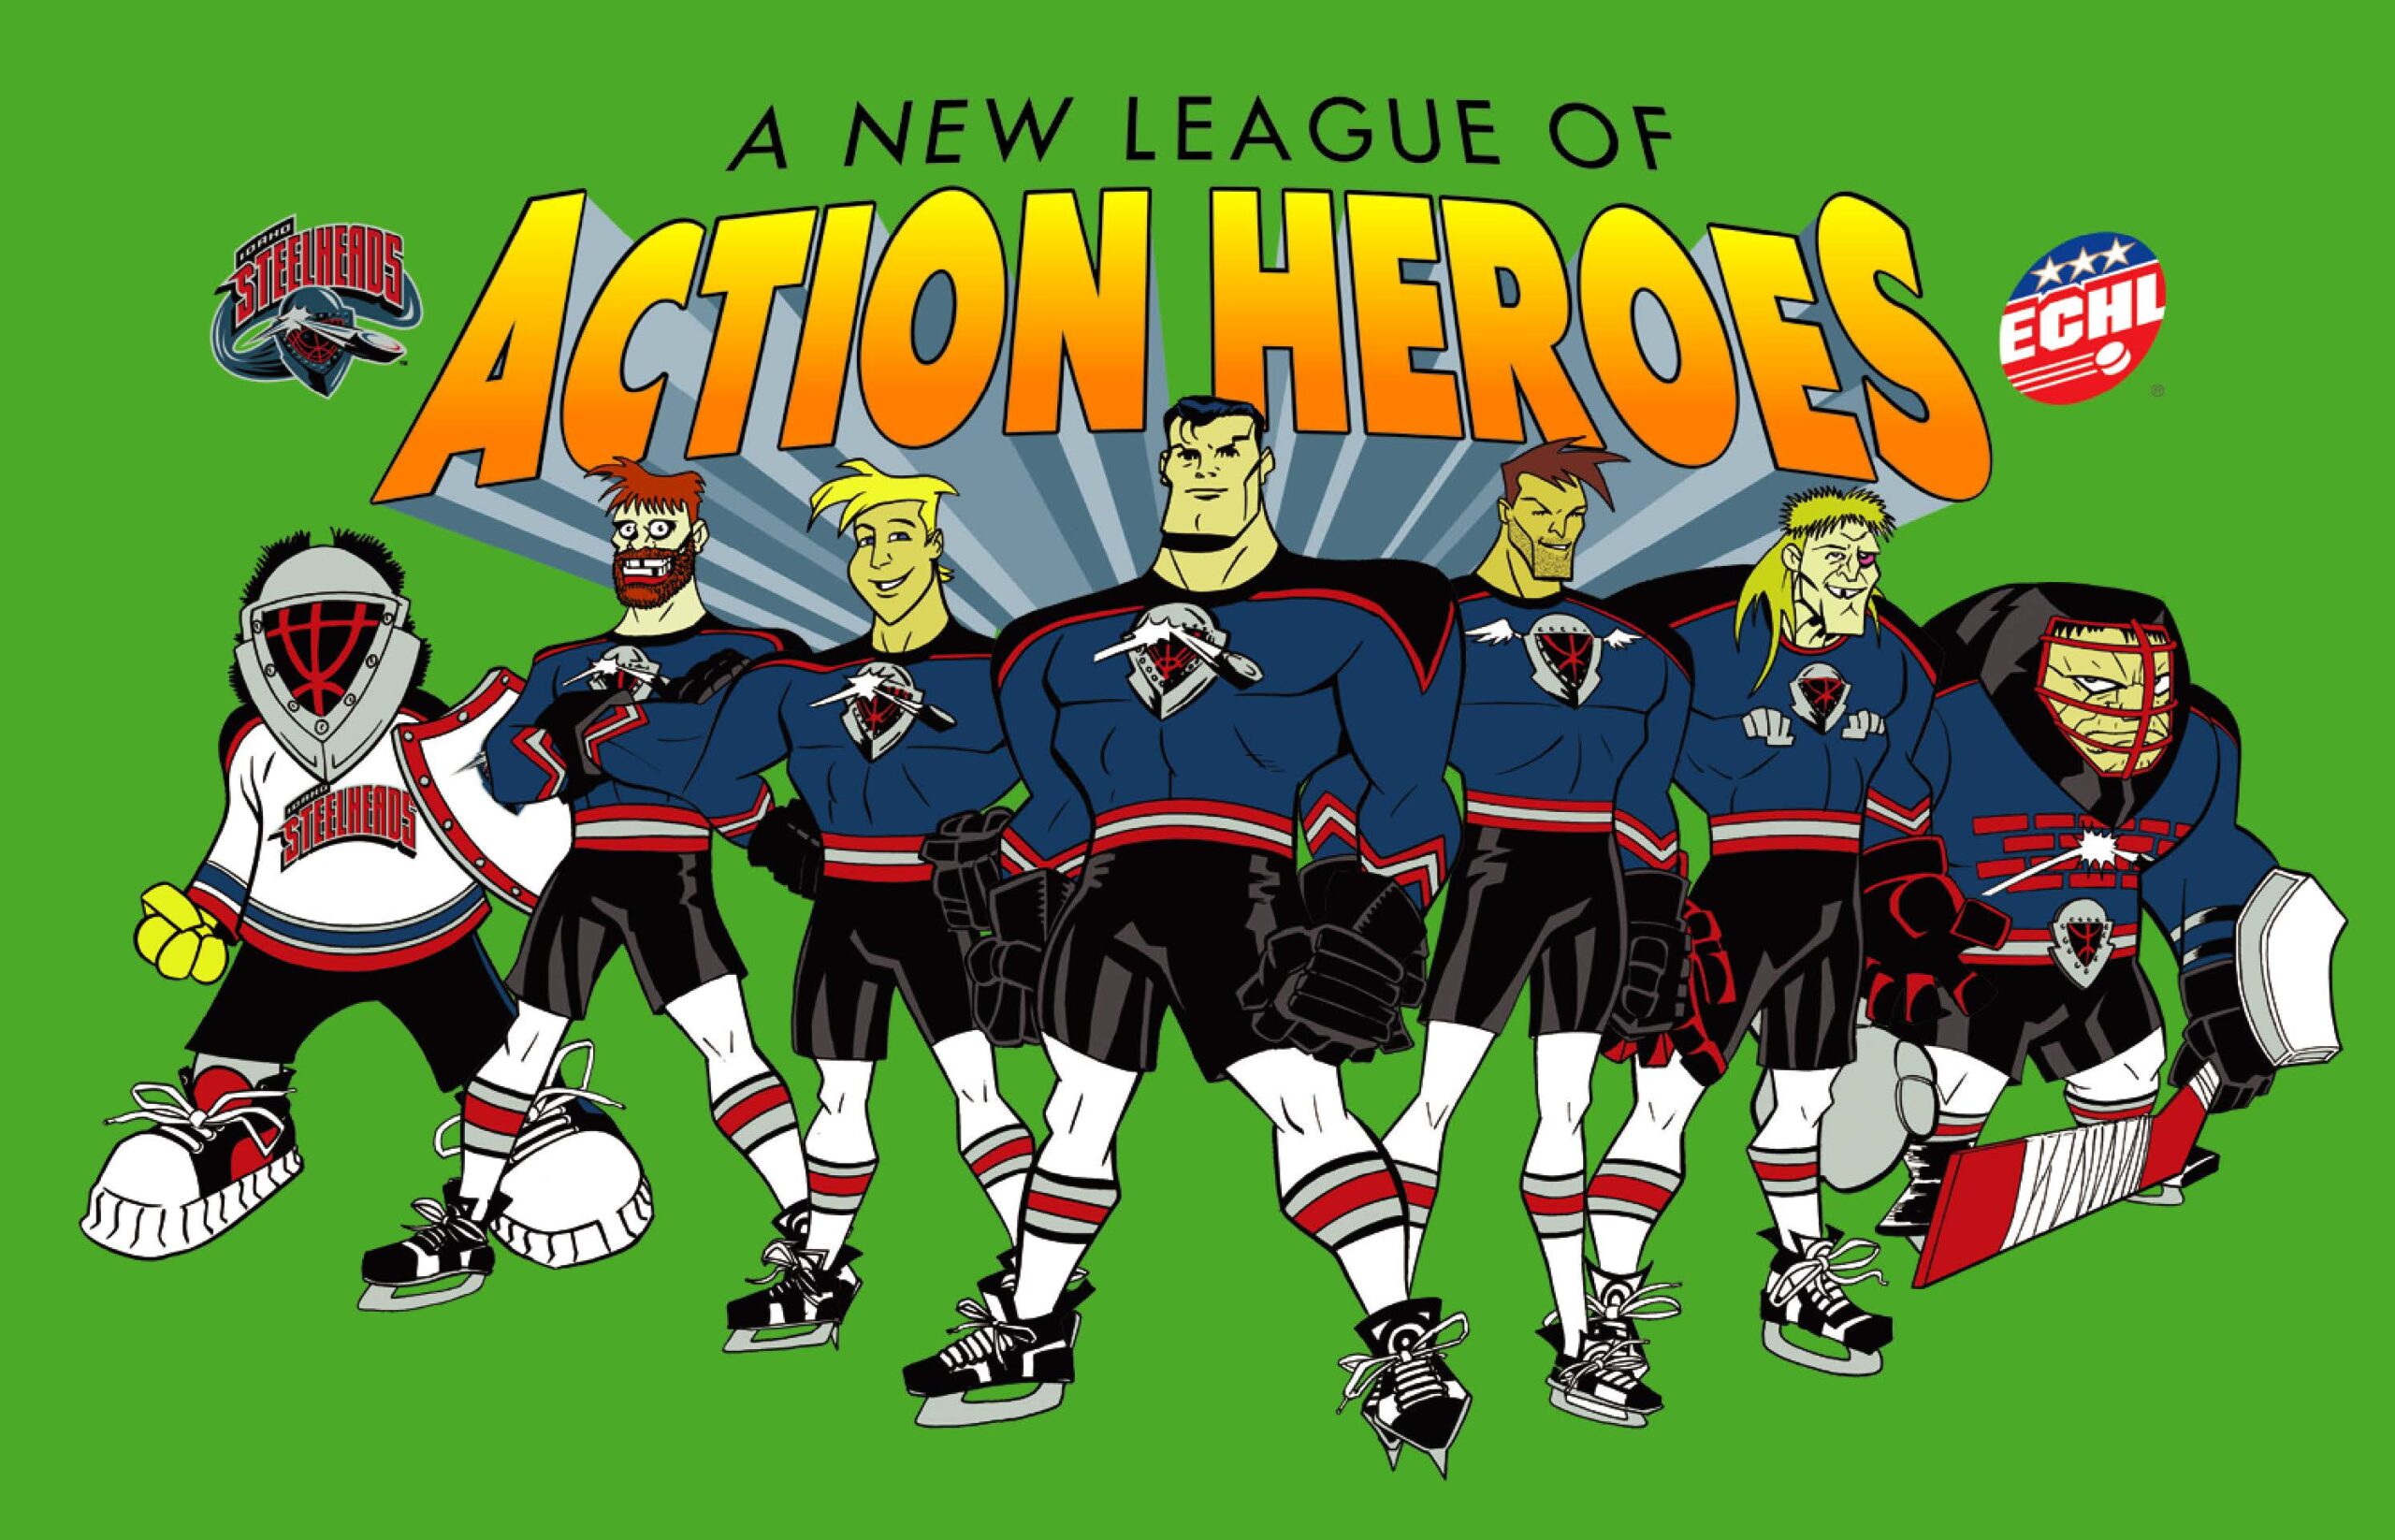 7 cartoon Idaho Steelhead hockey players posed as Action Heros designed by The Steelies Ad agency in Boise Idaho, 116 & West